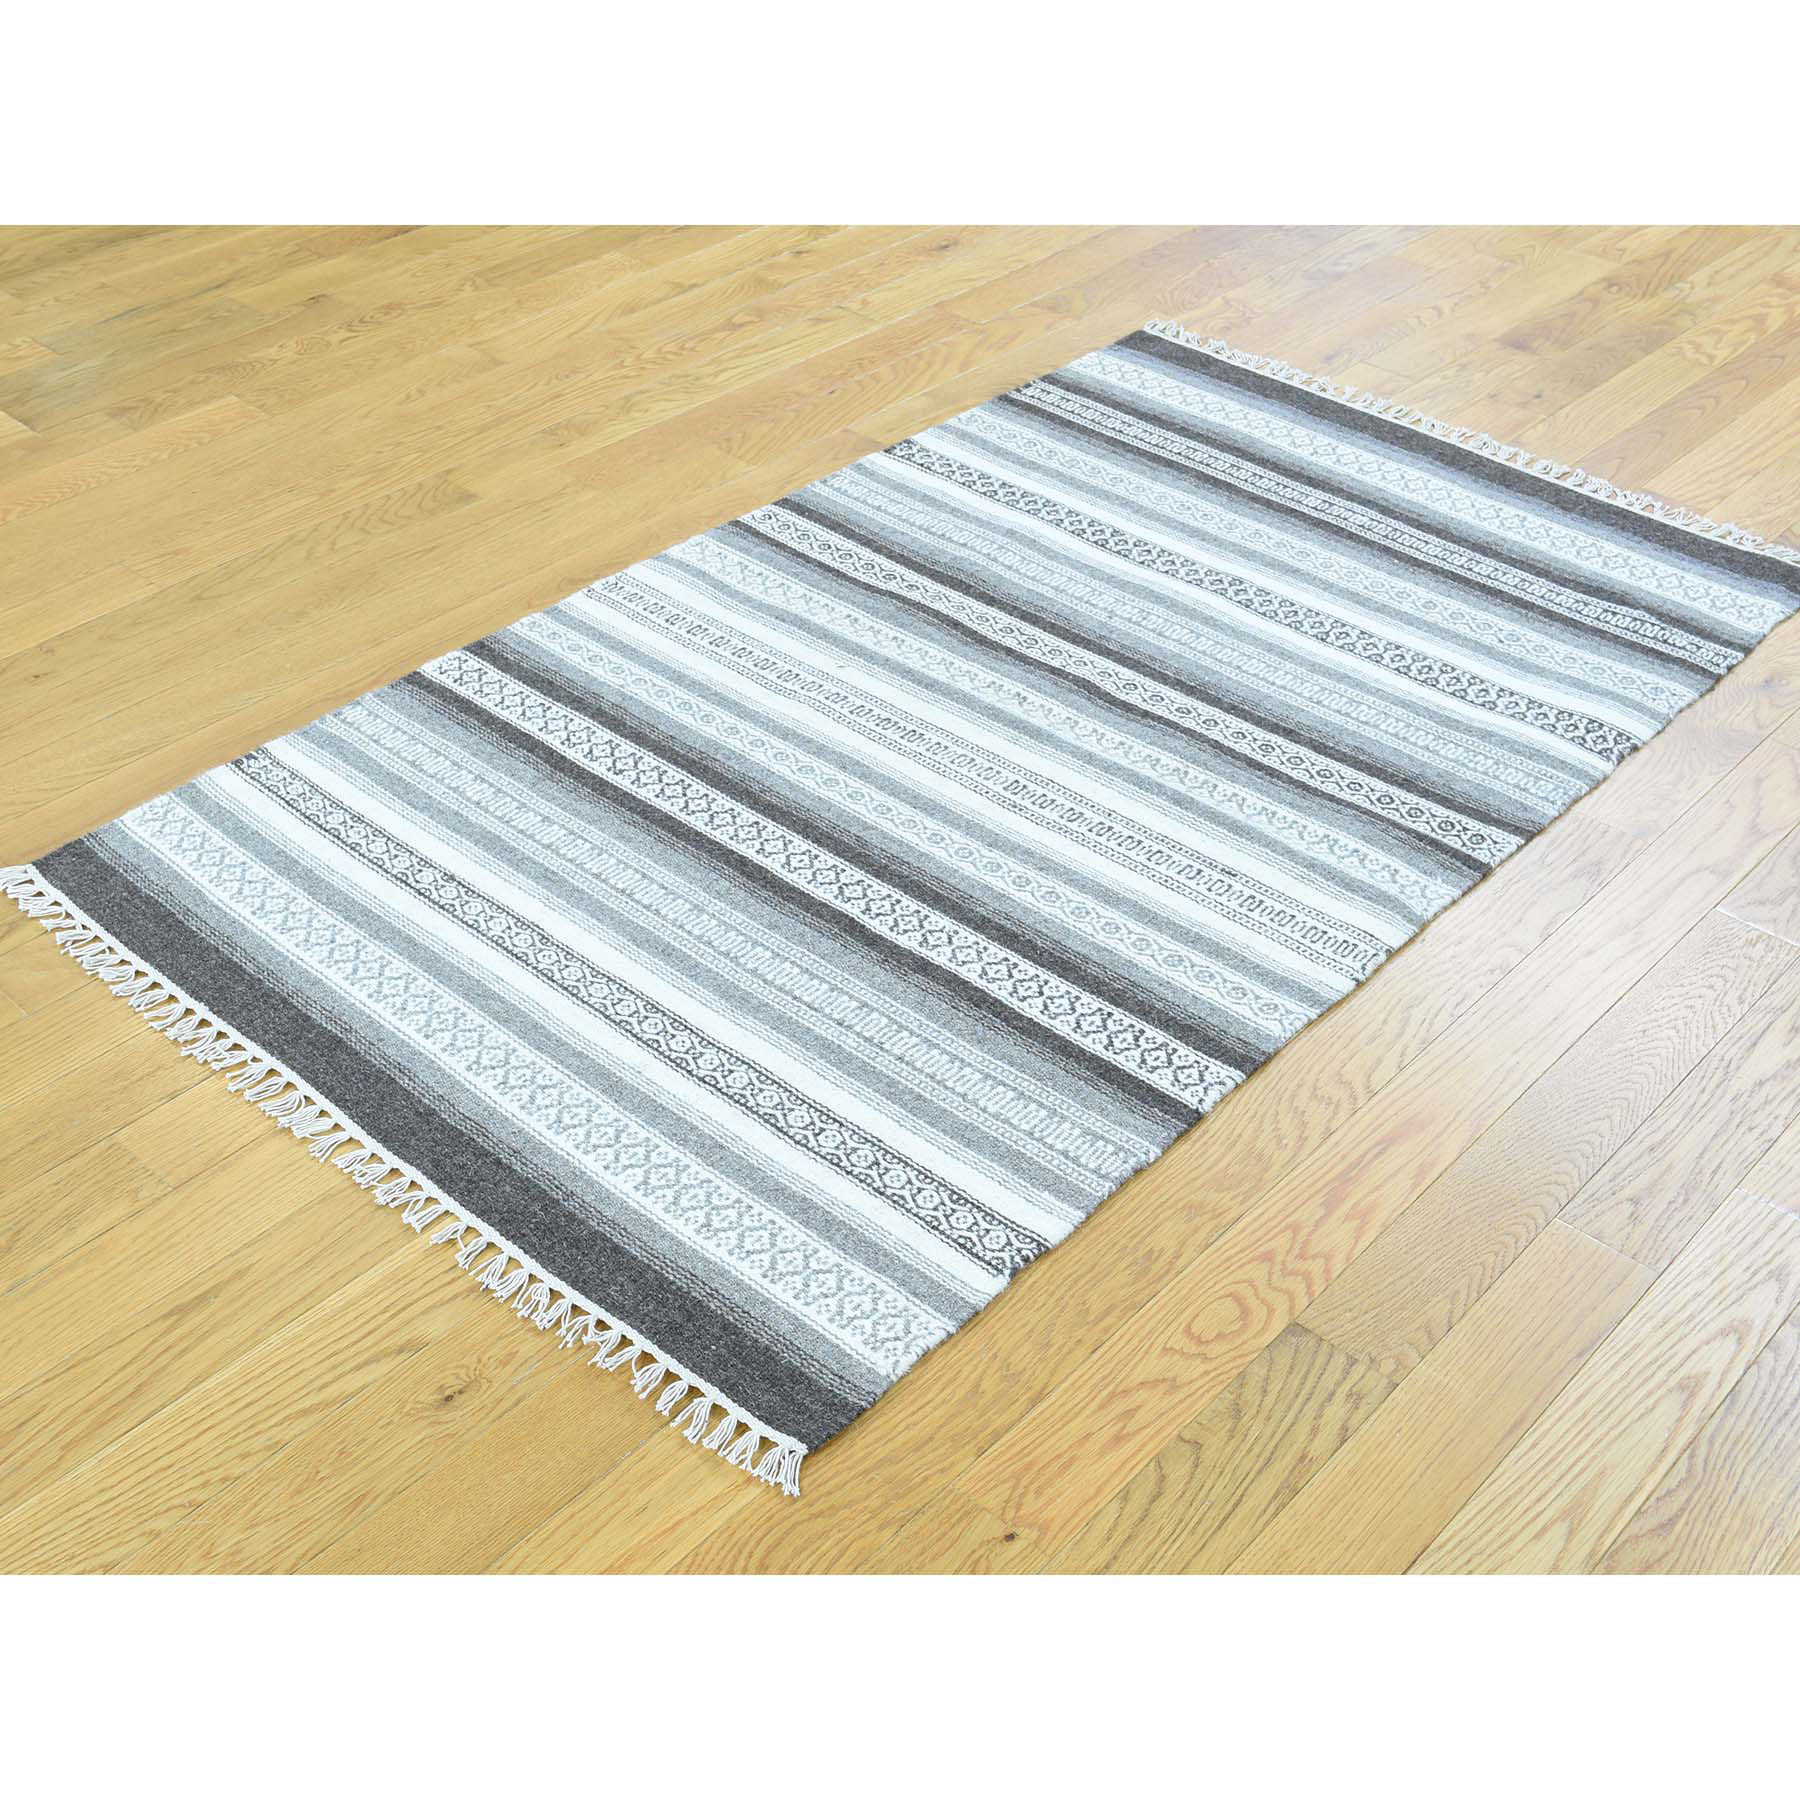 3-x5-1  Striped Reversible Kilim Hand-Woven Oriental Flat Weave Rug 